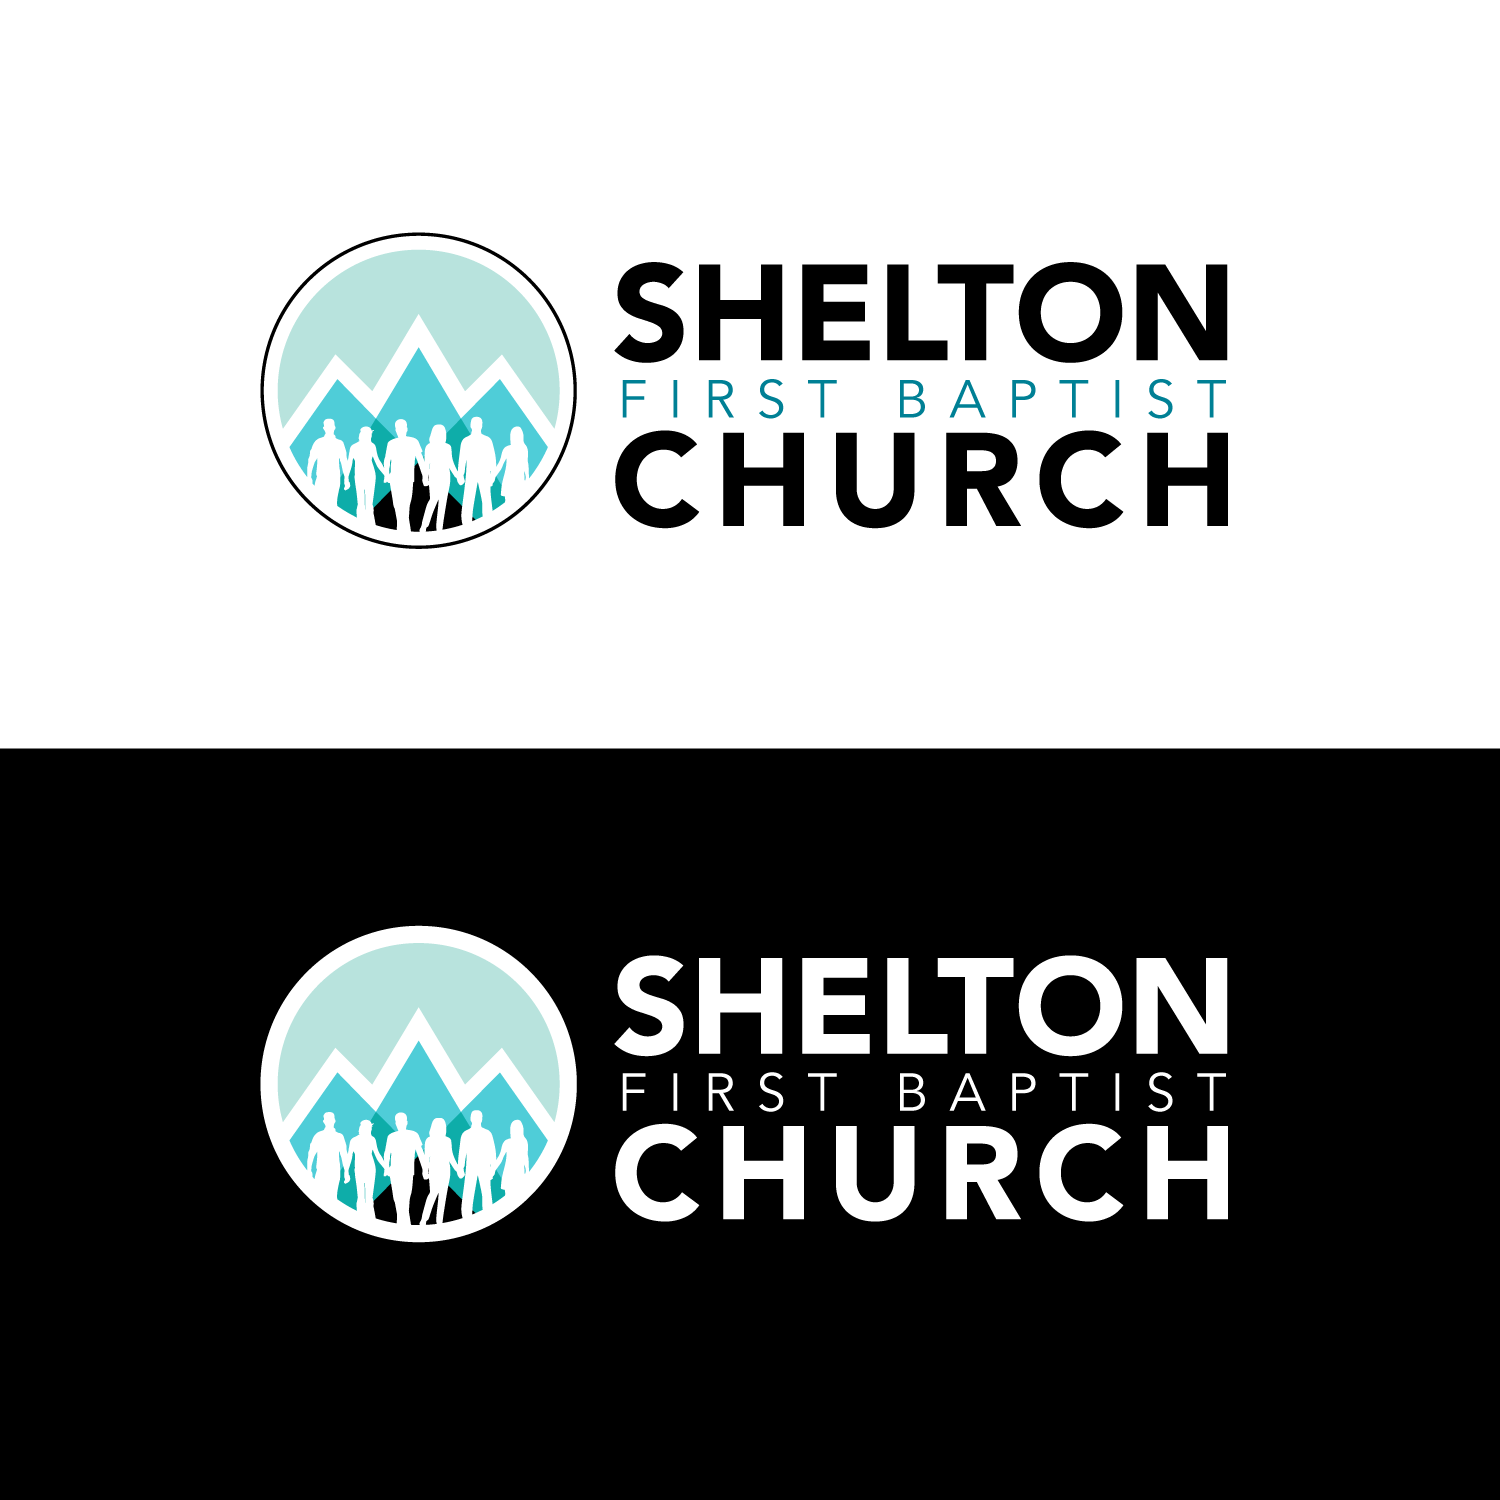 CC Lightning Logo - Modern, Professional, Church Logo Design for Shelton First Baptist